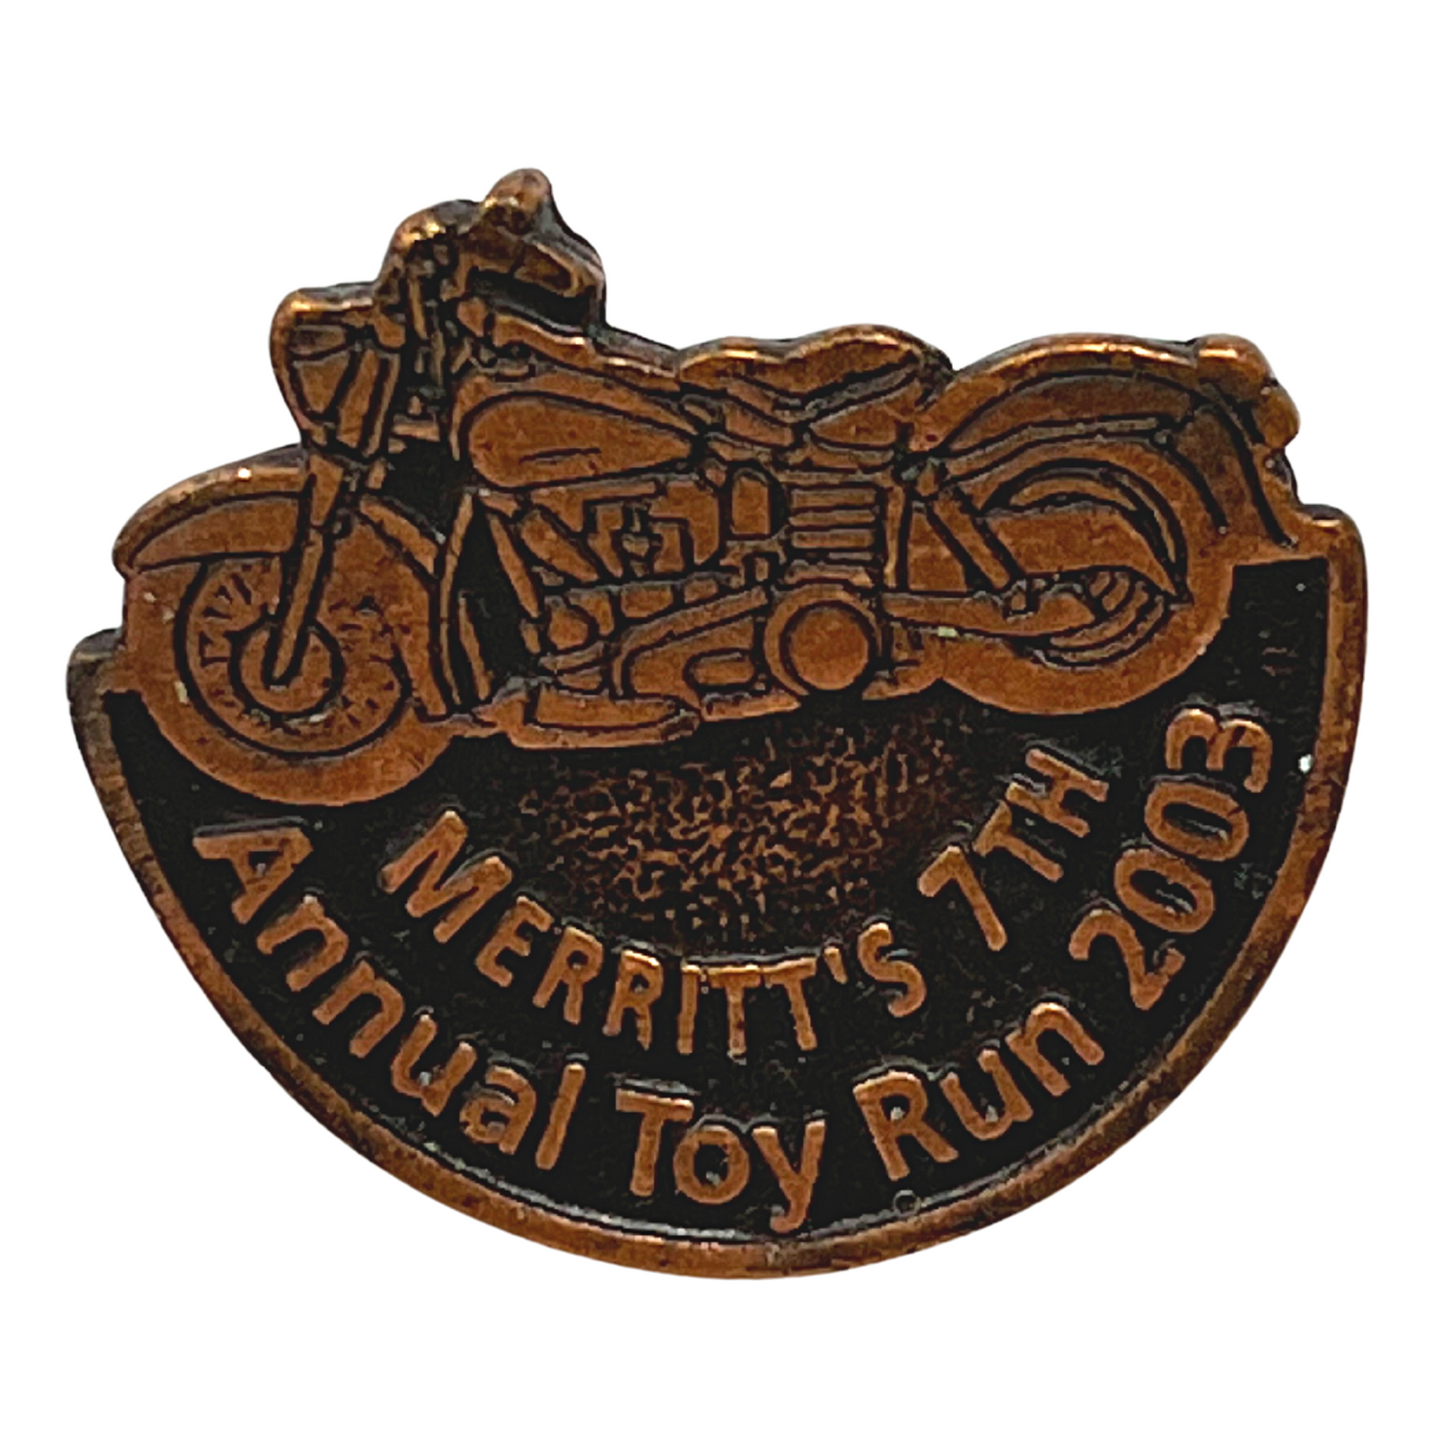 Merritt's 7th Annual Toy Run 2003 Motorcycle Harley-Davidson Lapel Pin